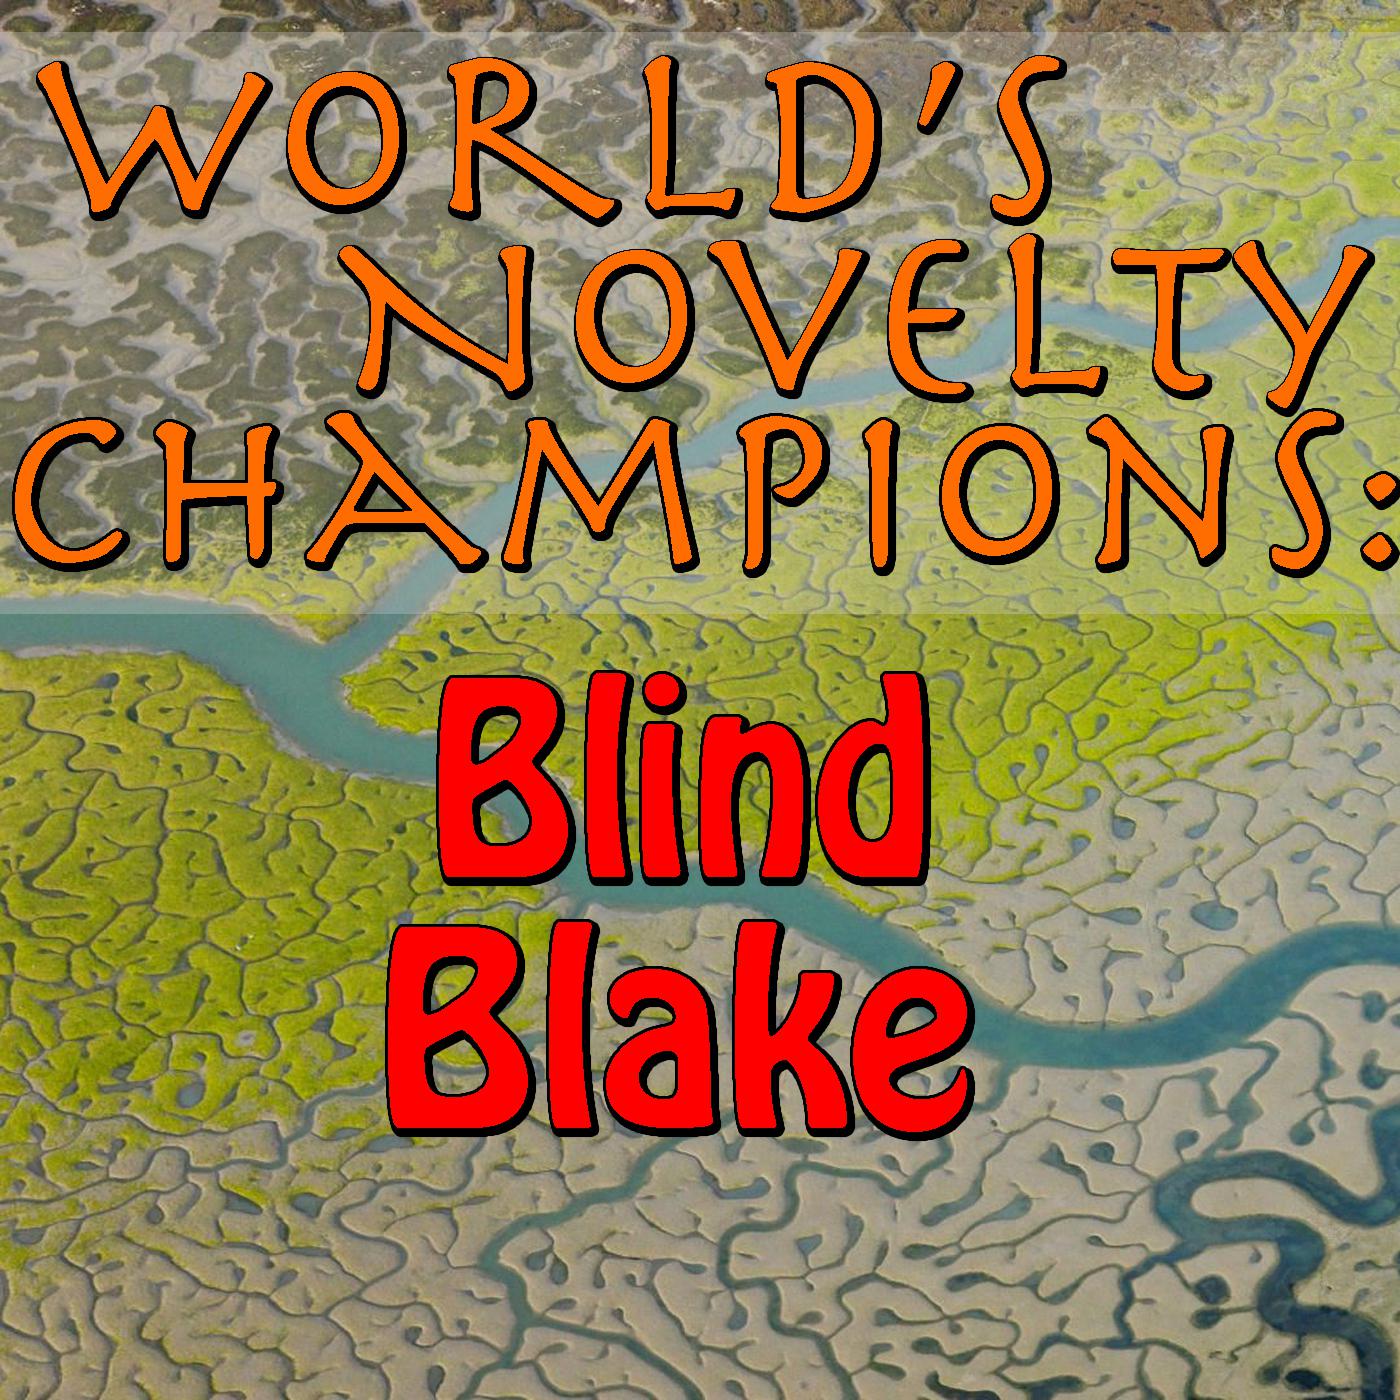 World's Novelty Champions: Blind Blake